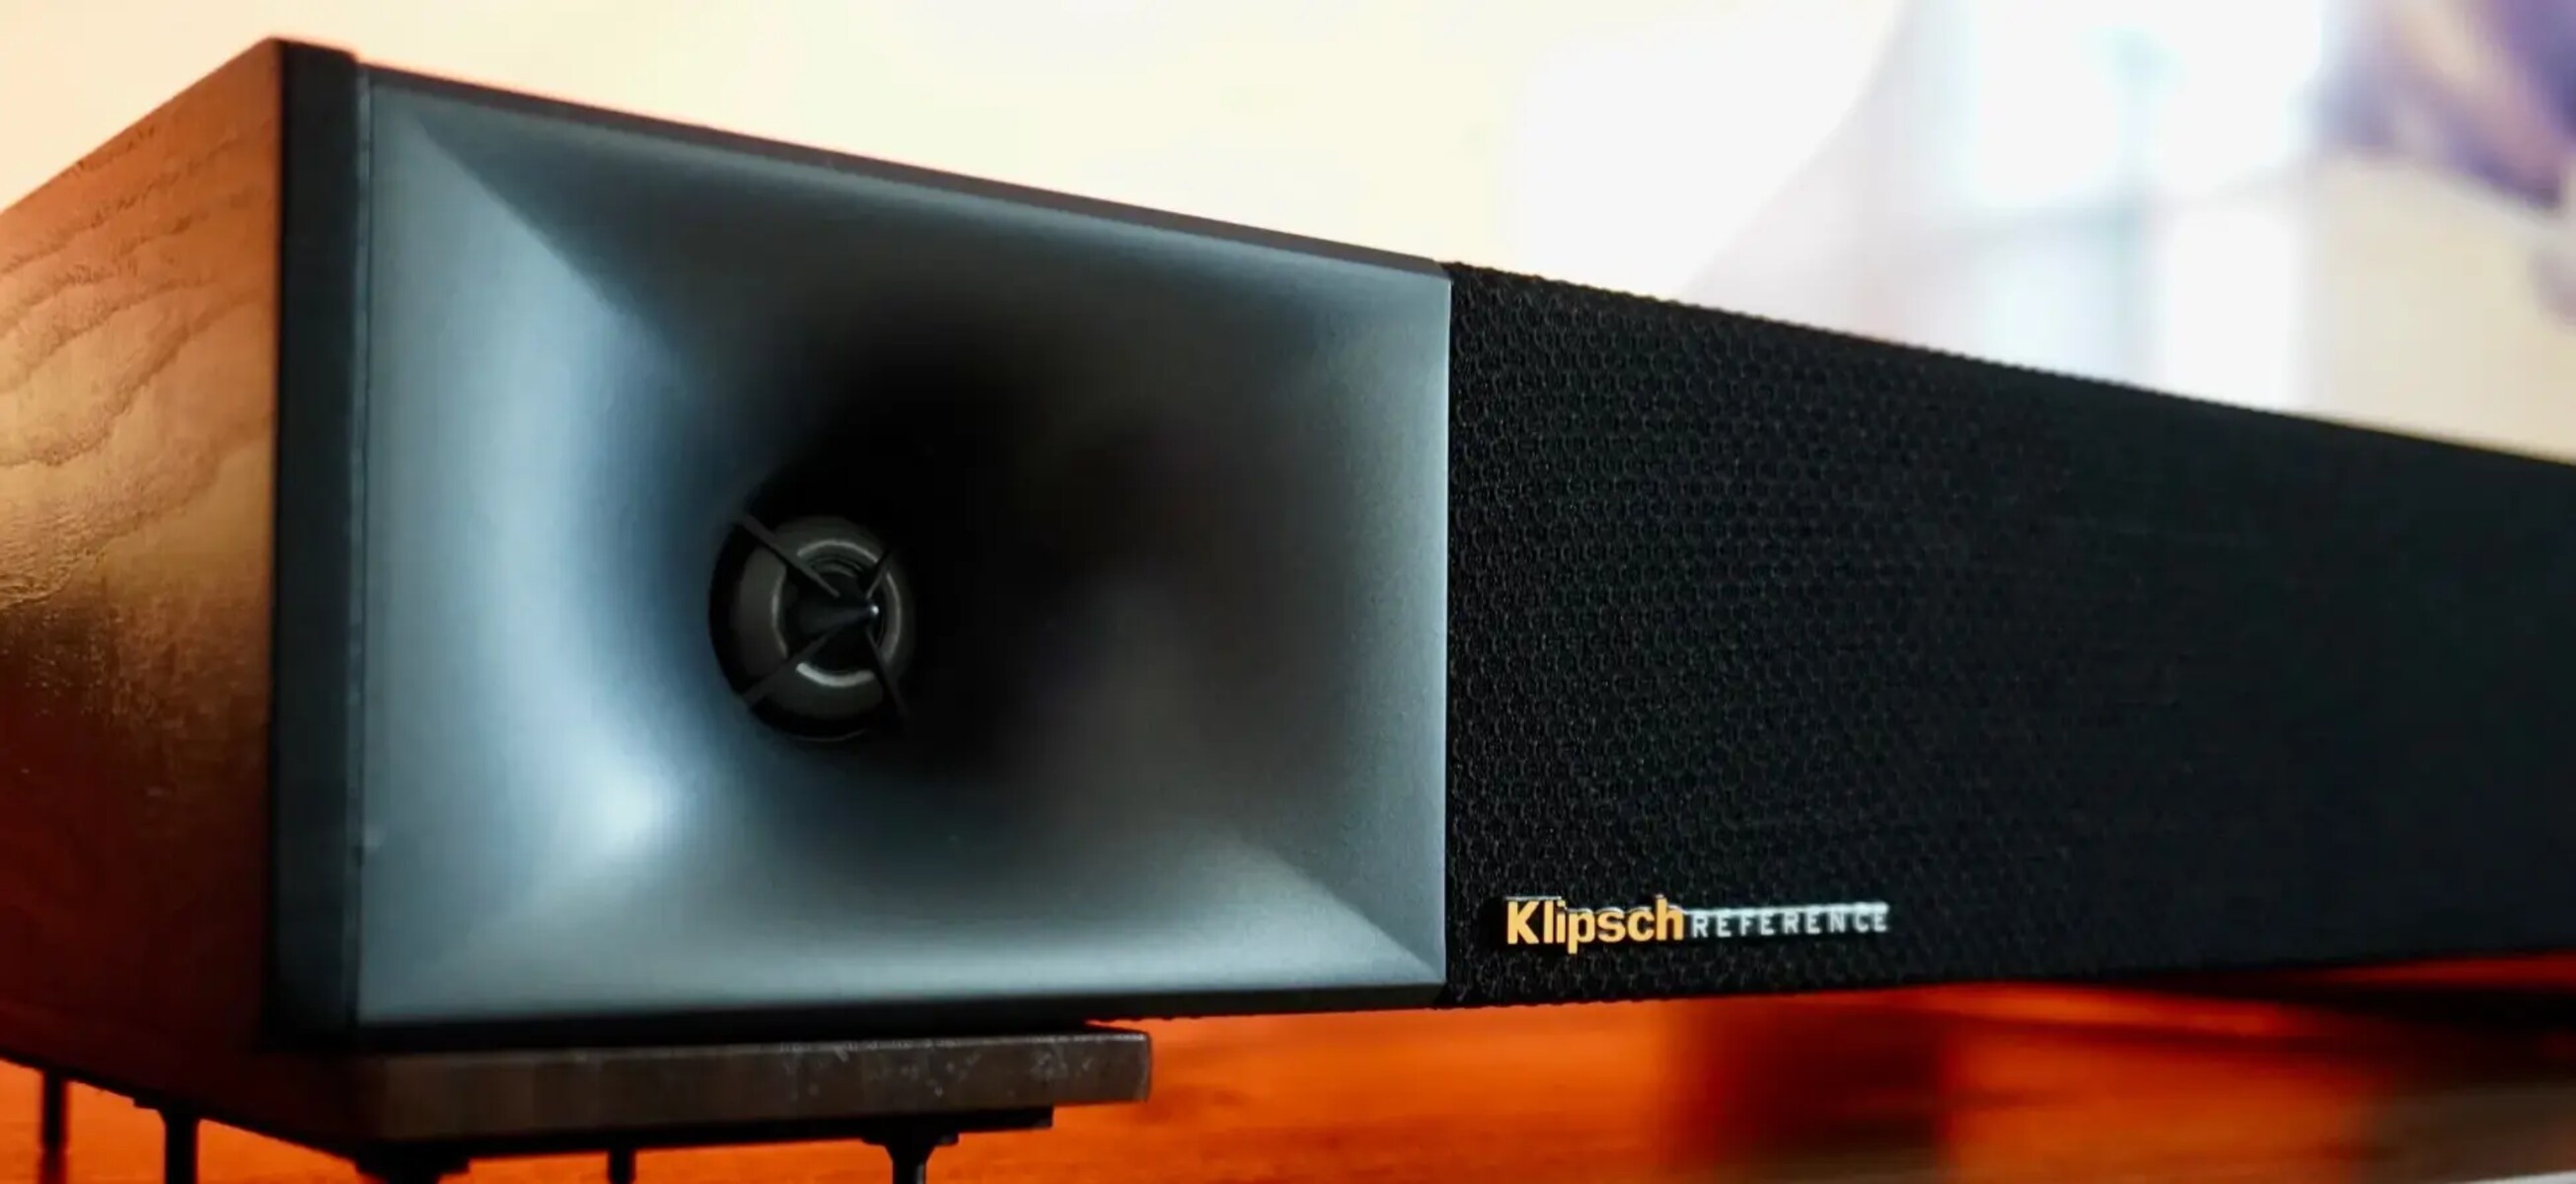 How To Pair A Klipsch Soundbar